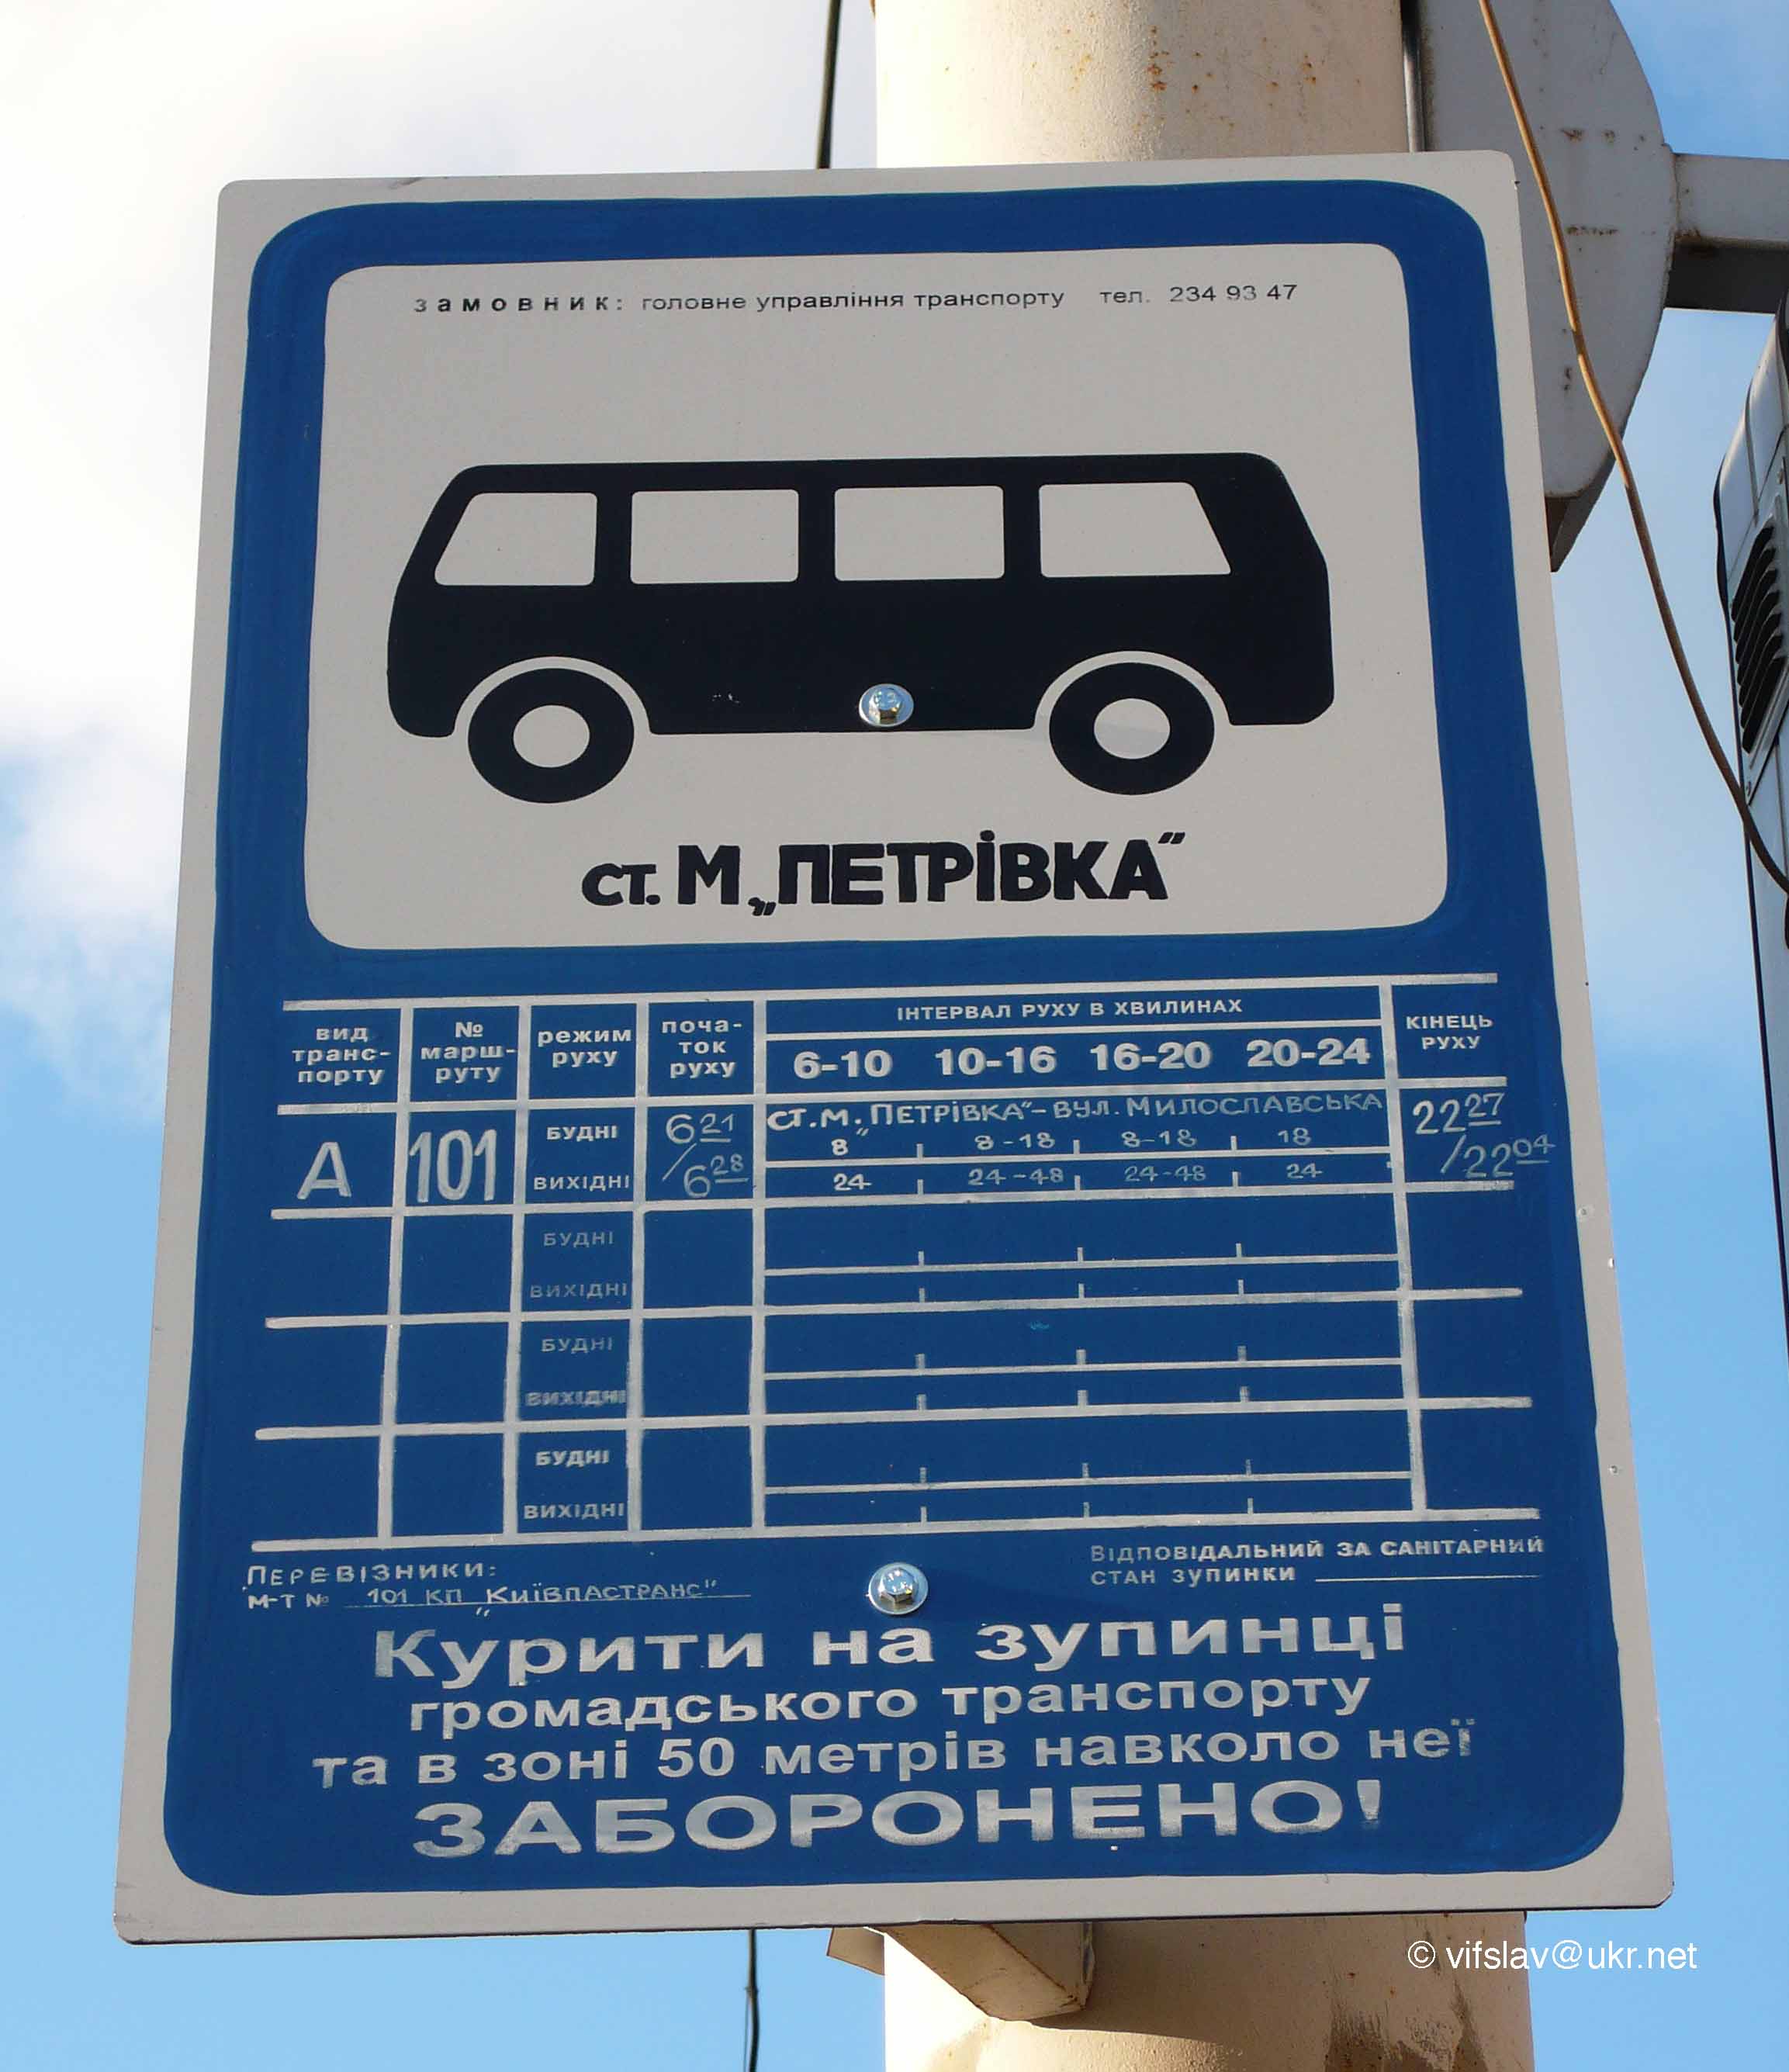 Автобус 101 маршрут на карте. Автобус 101. Остановка 101 автобуса. Северодонецк троллейбус. Конечная остановка автобусов на Украину.